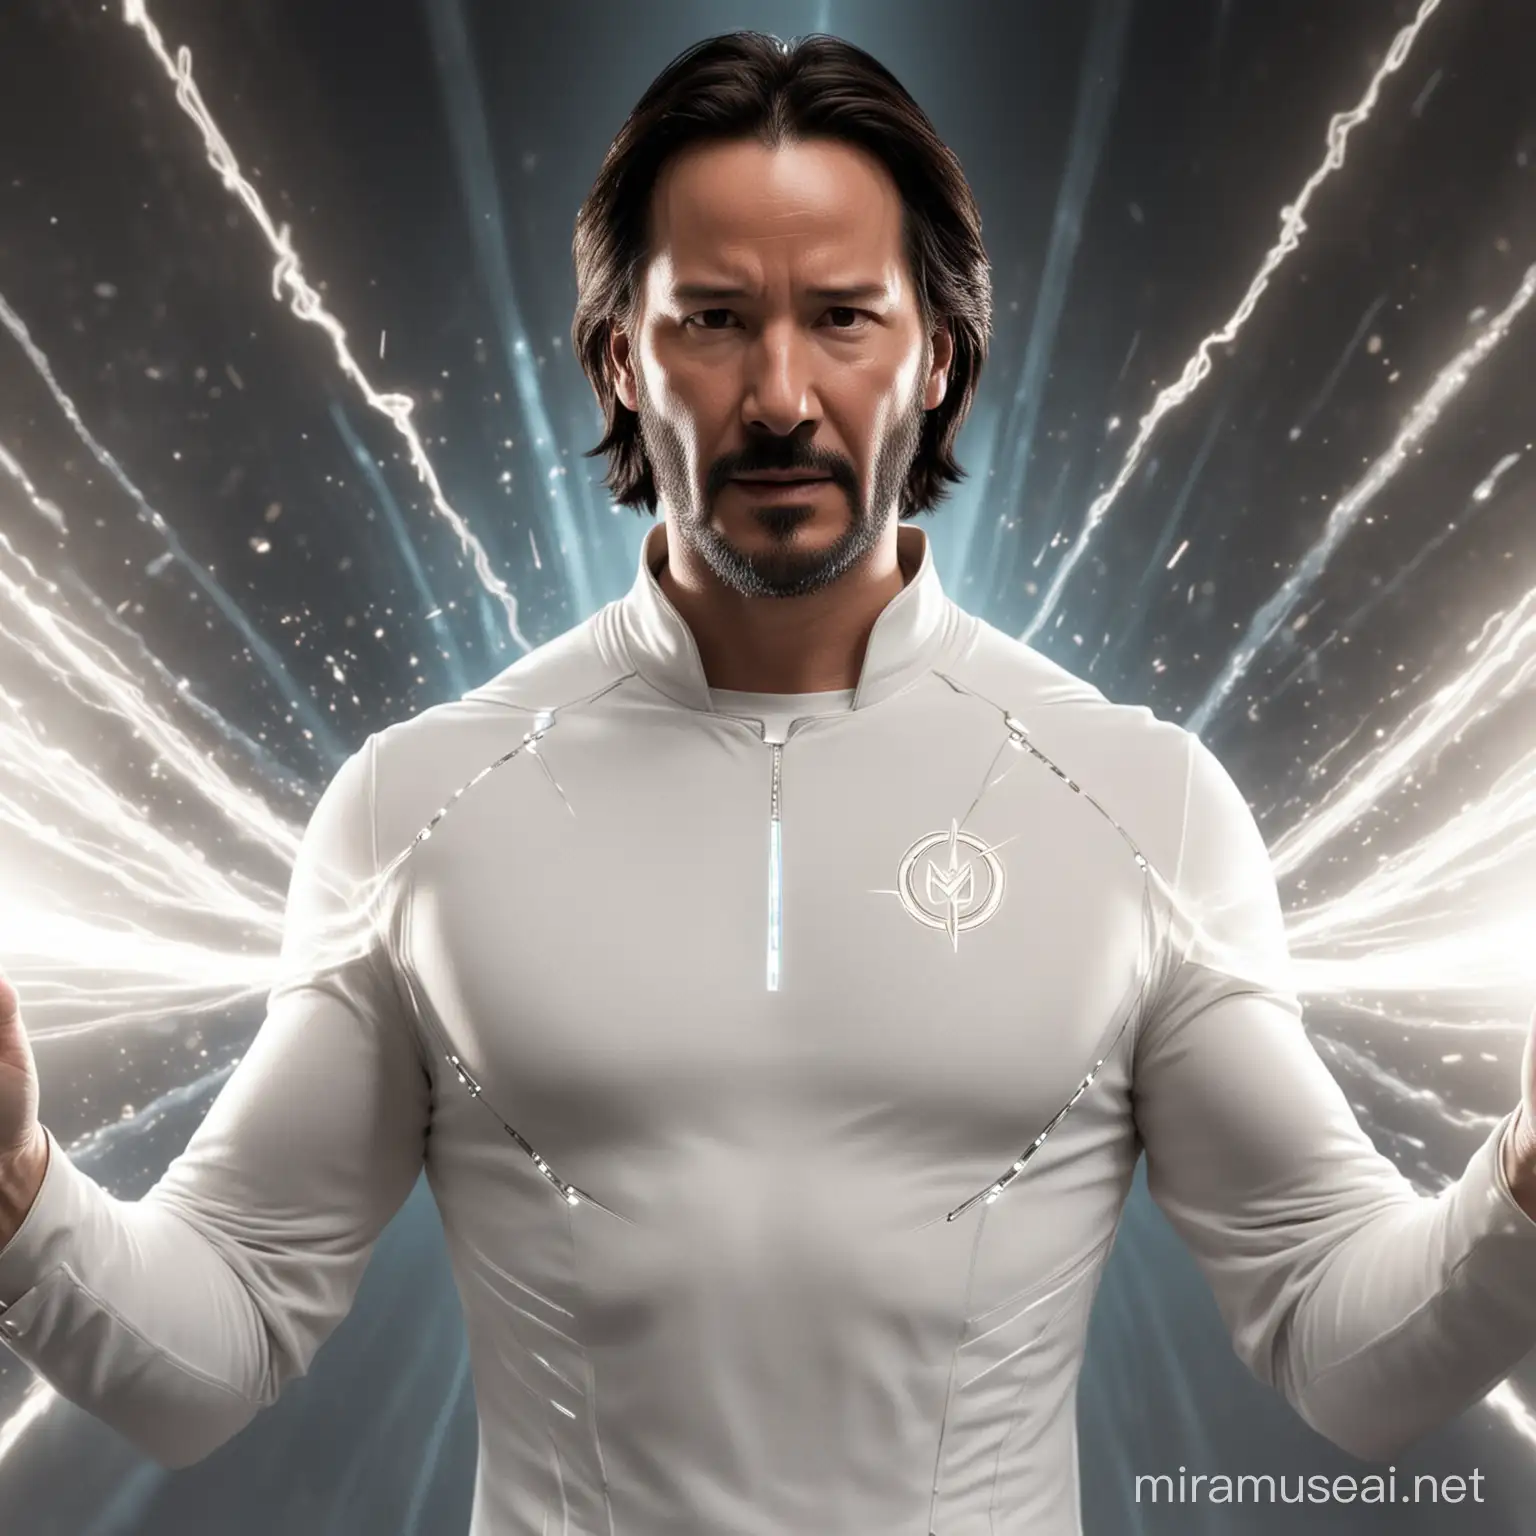 Keanu Reeves Portraying Futuristic God with Marvel Symbol